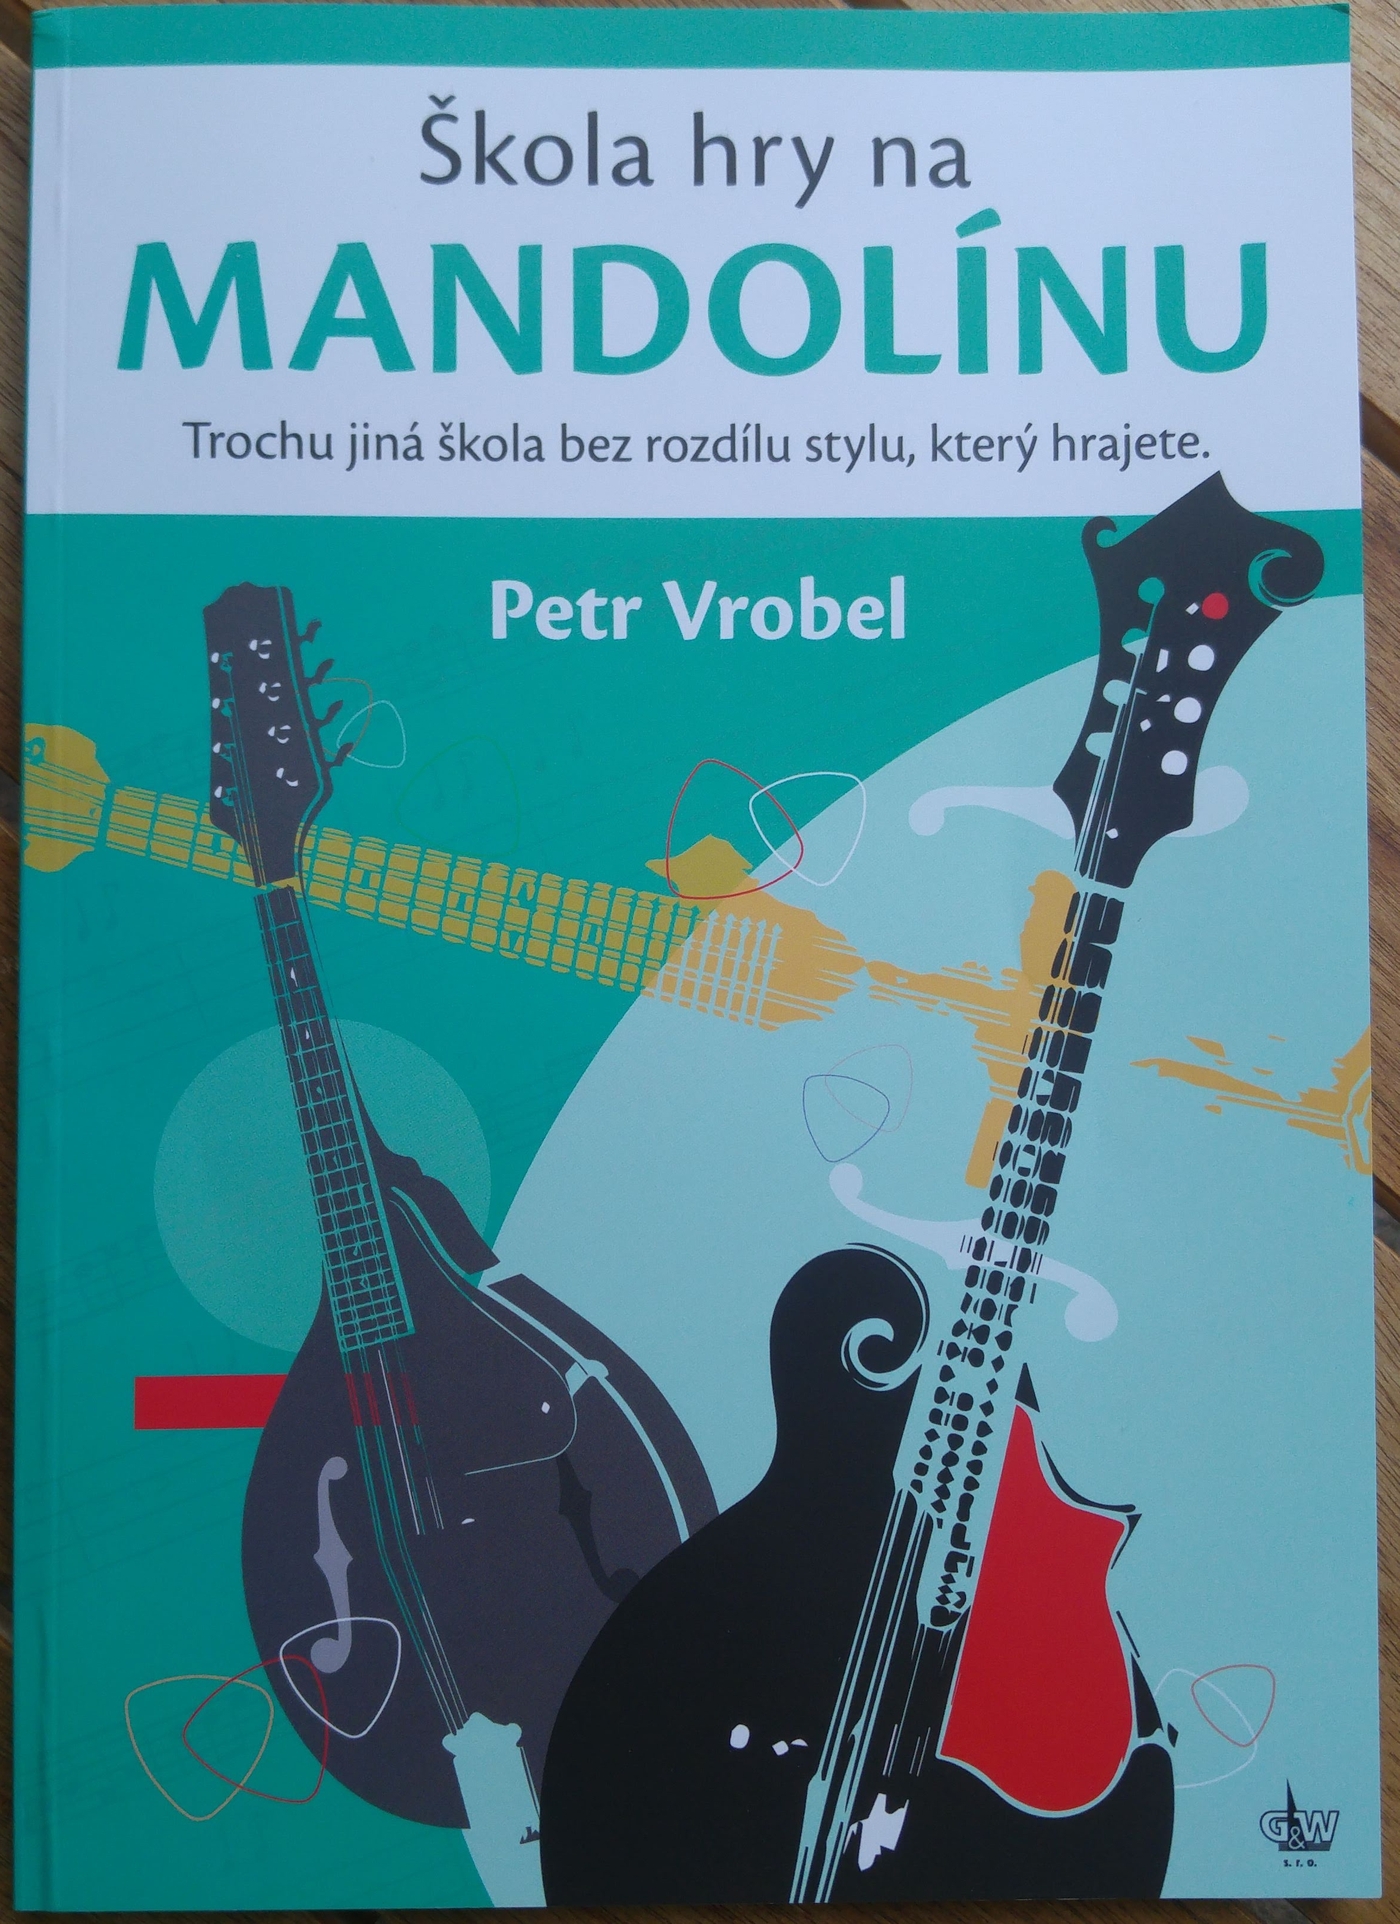 Petr Vrobl - Mandolin Method in Czech language 2019